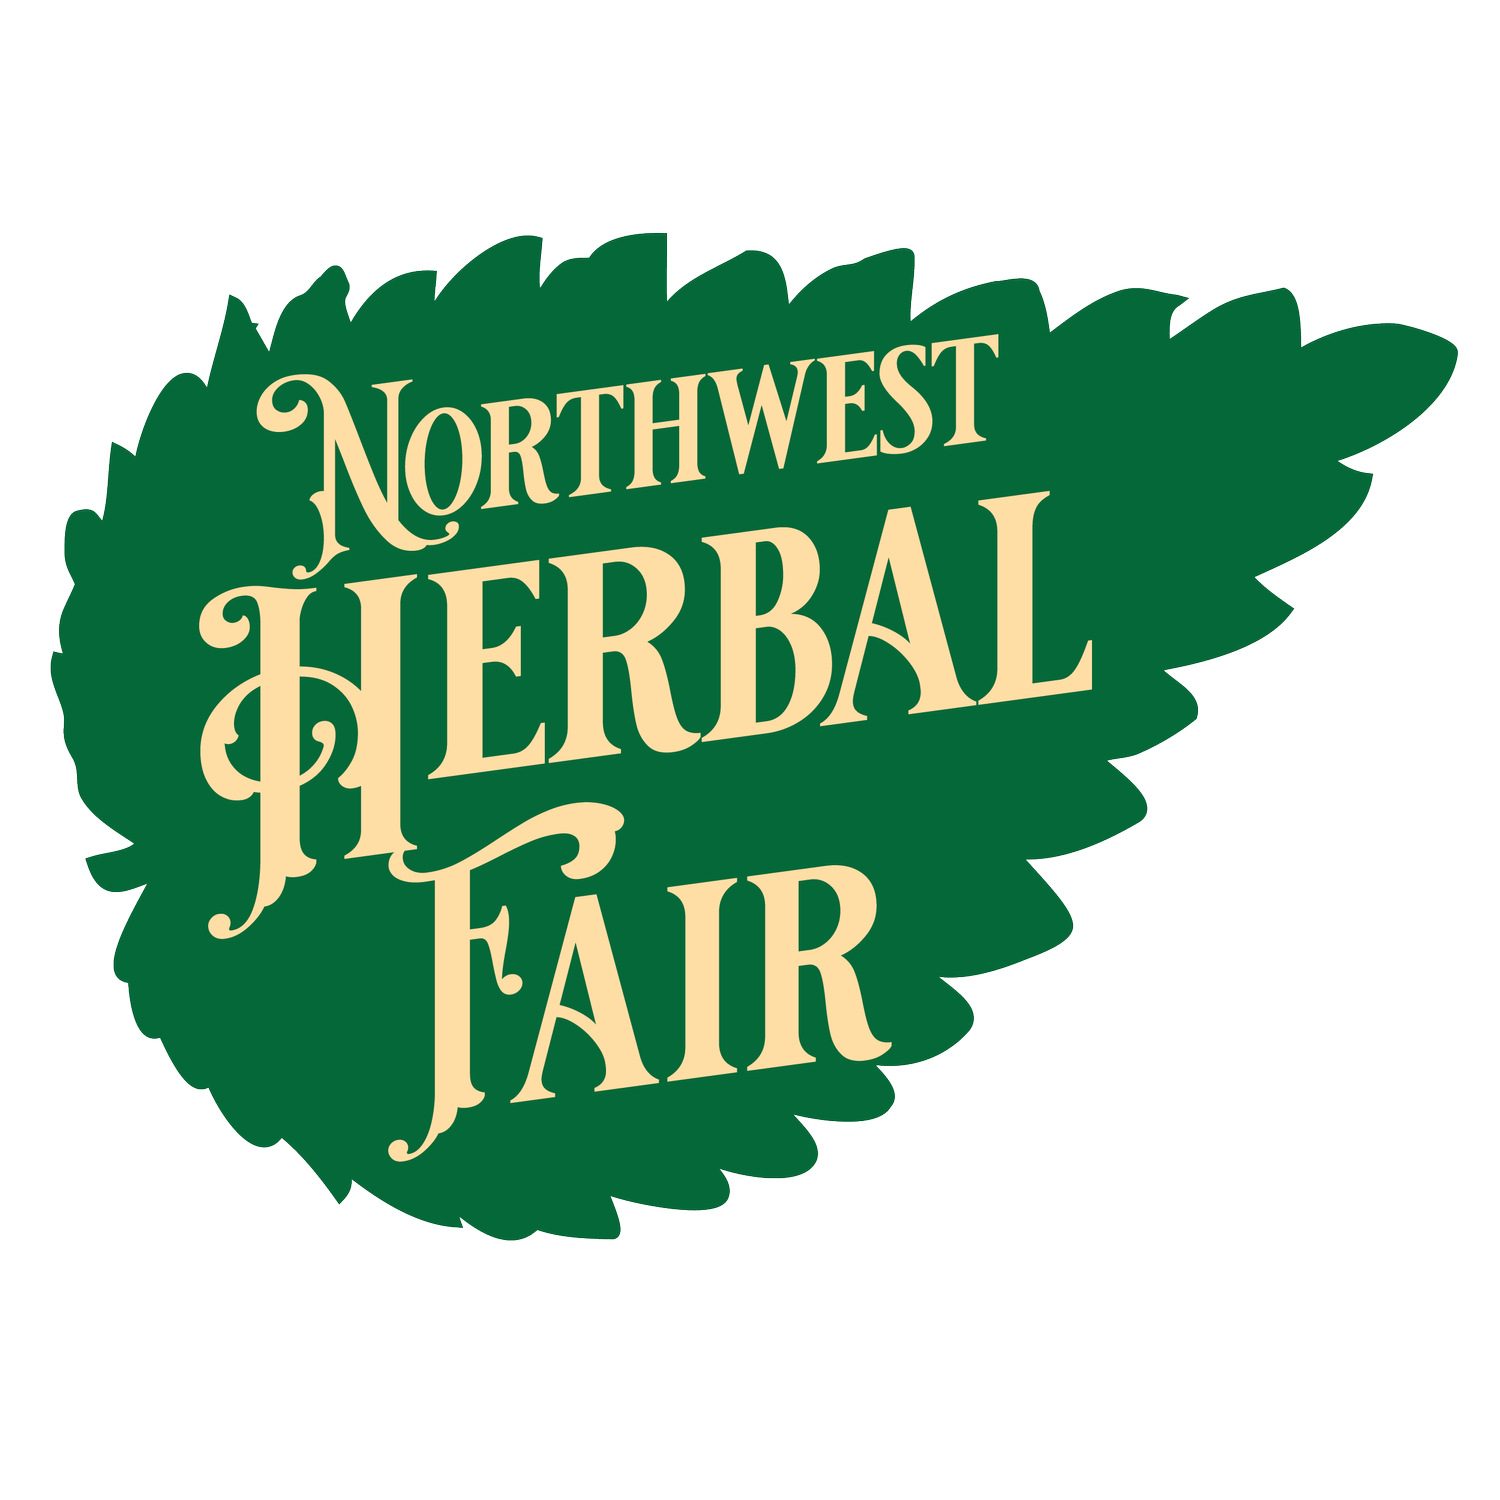 15th Northwest Herbal Fair